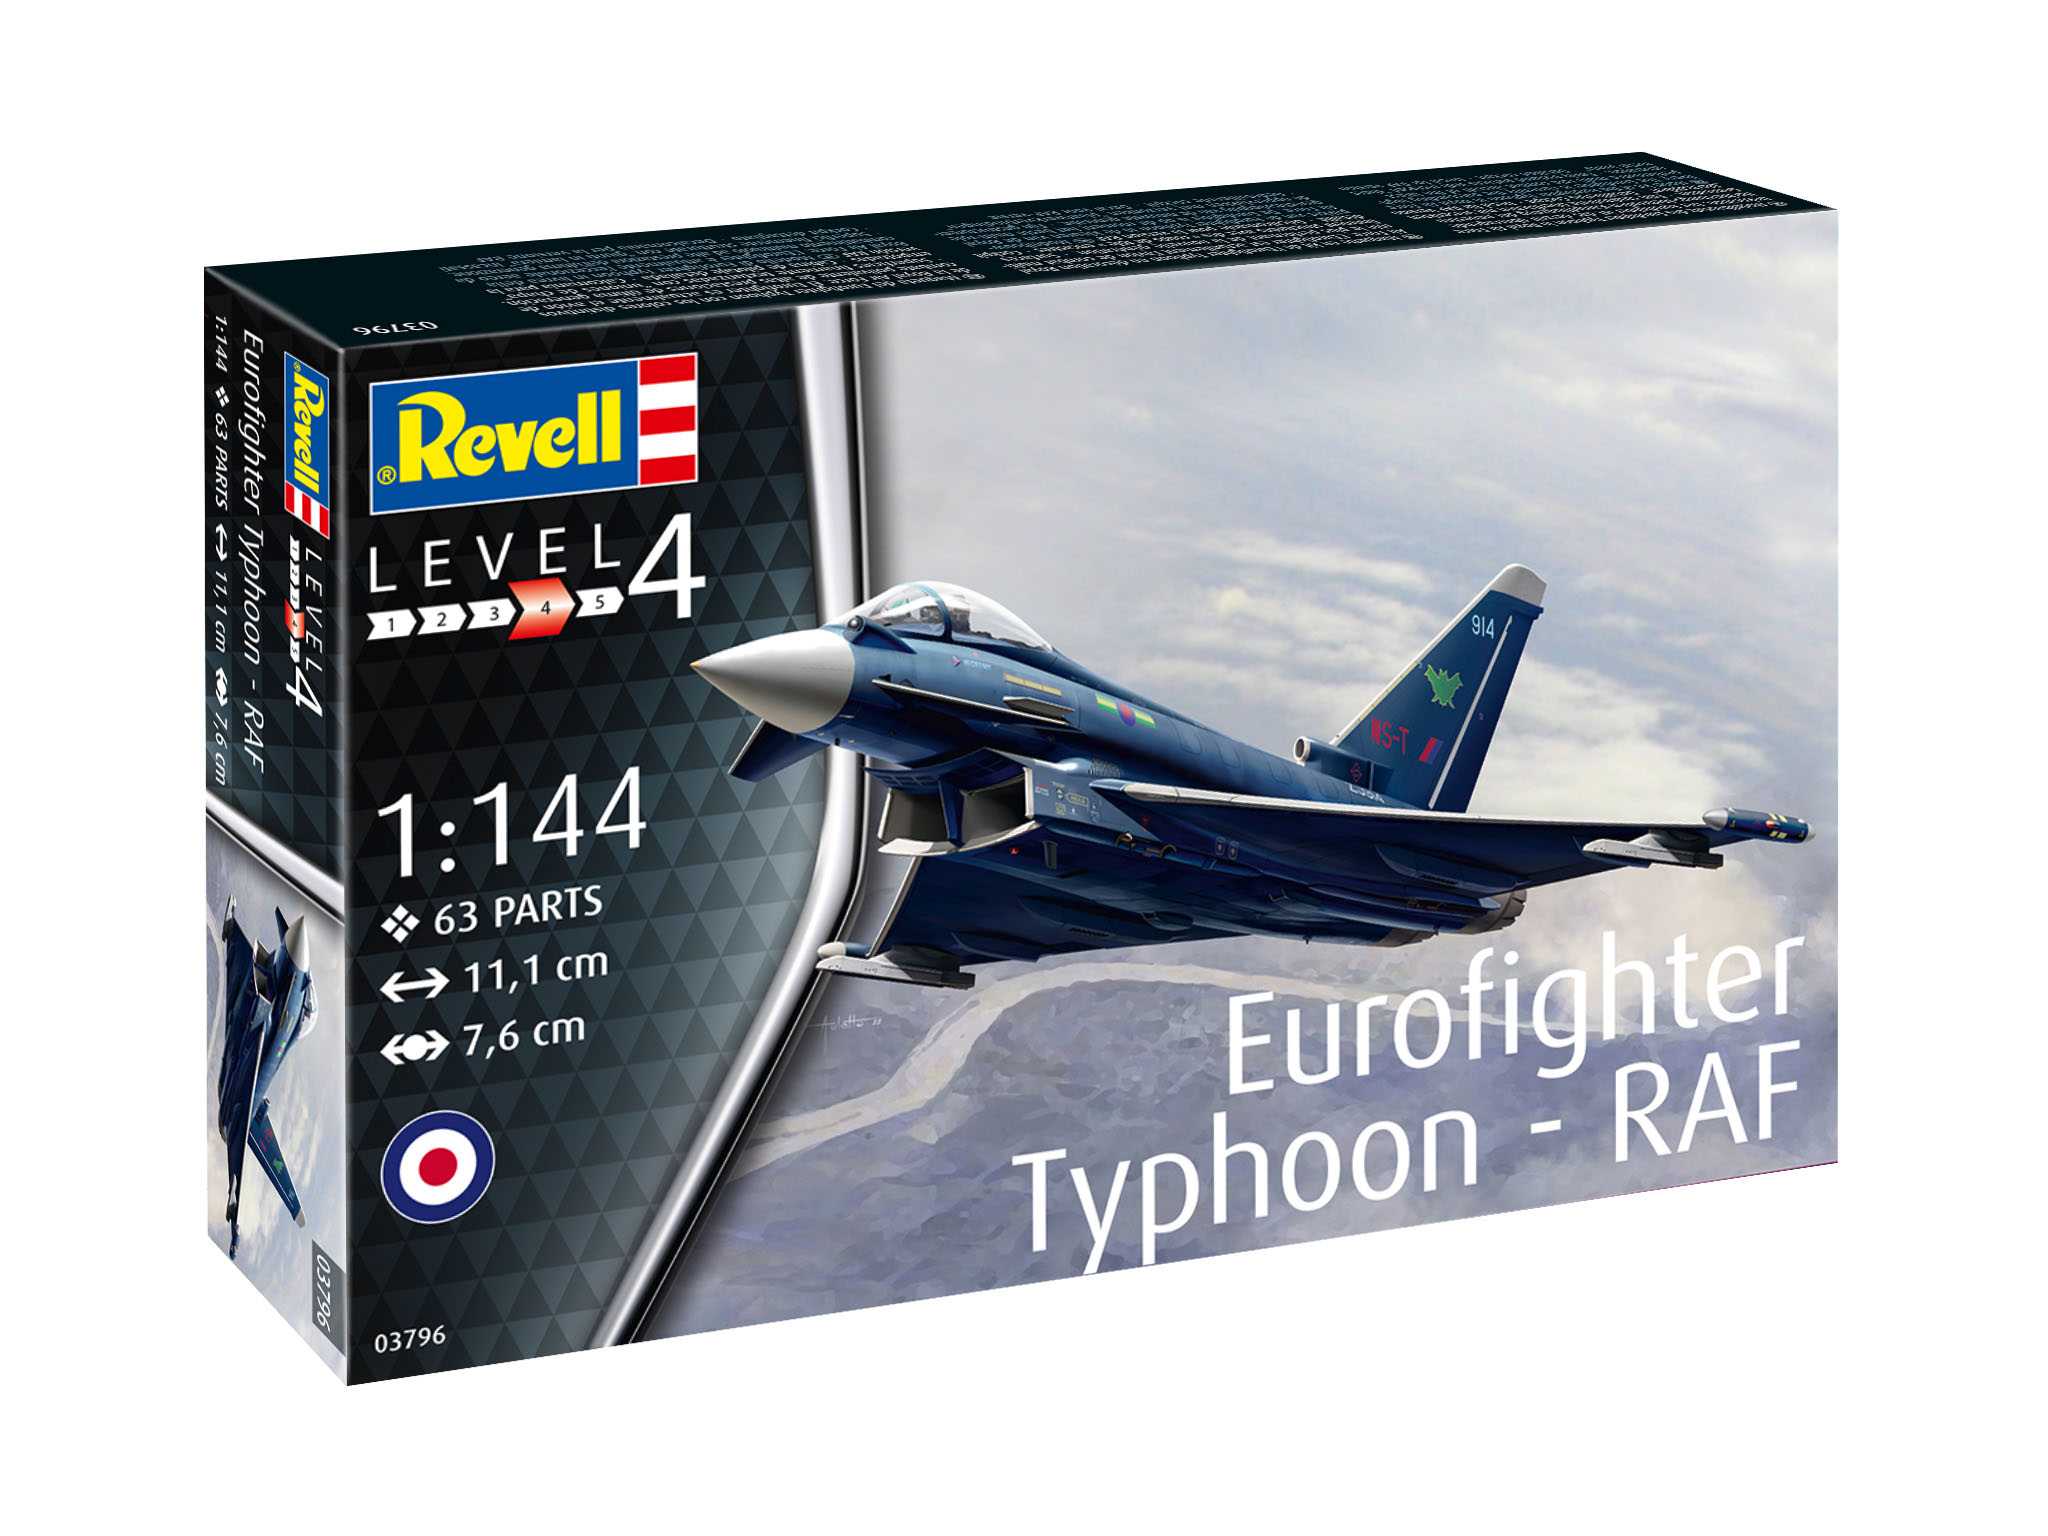 Fotografie Plastic ModelKit letadlo 03796 - Eurofighter Typhoon - RAF (1:144)